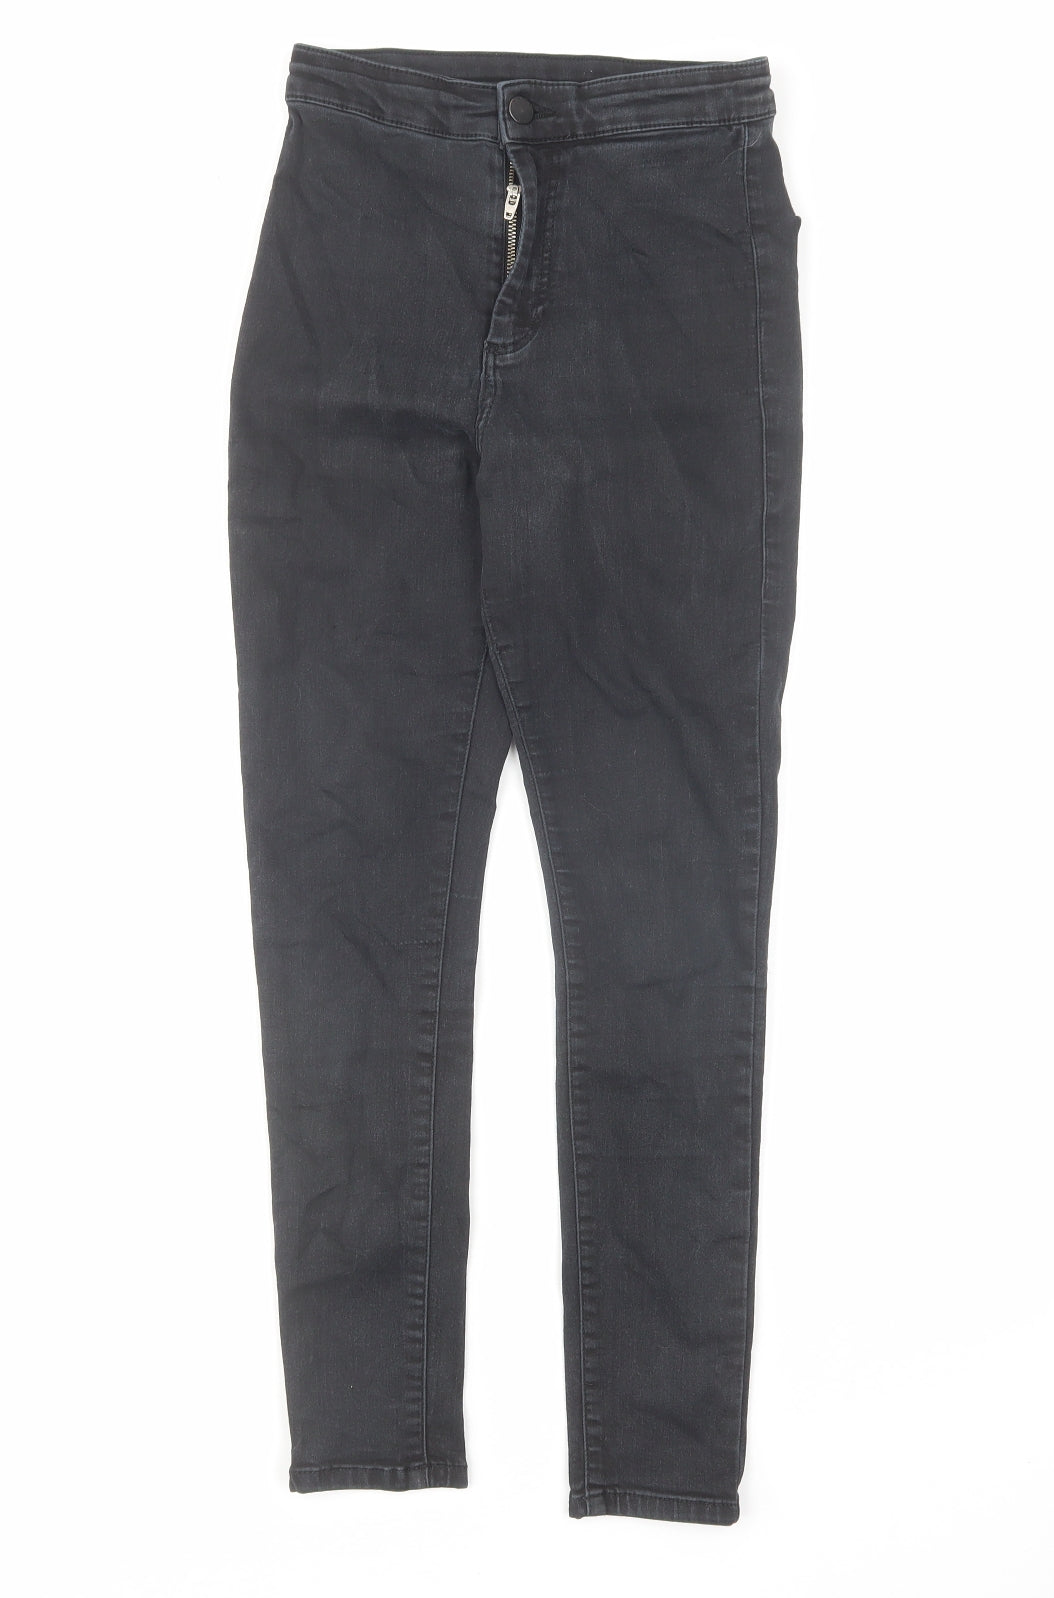 Topshop Womens Black Cotton Skinny Jeans Size 26 in L28 in Regular Zip